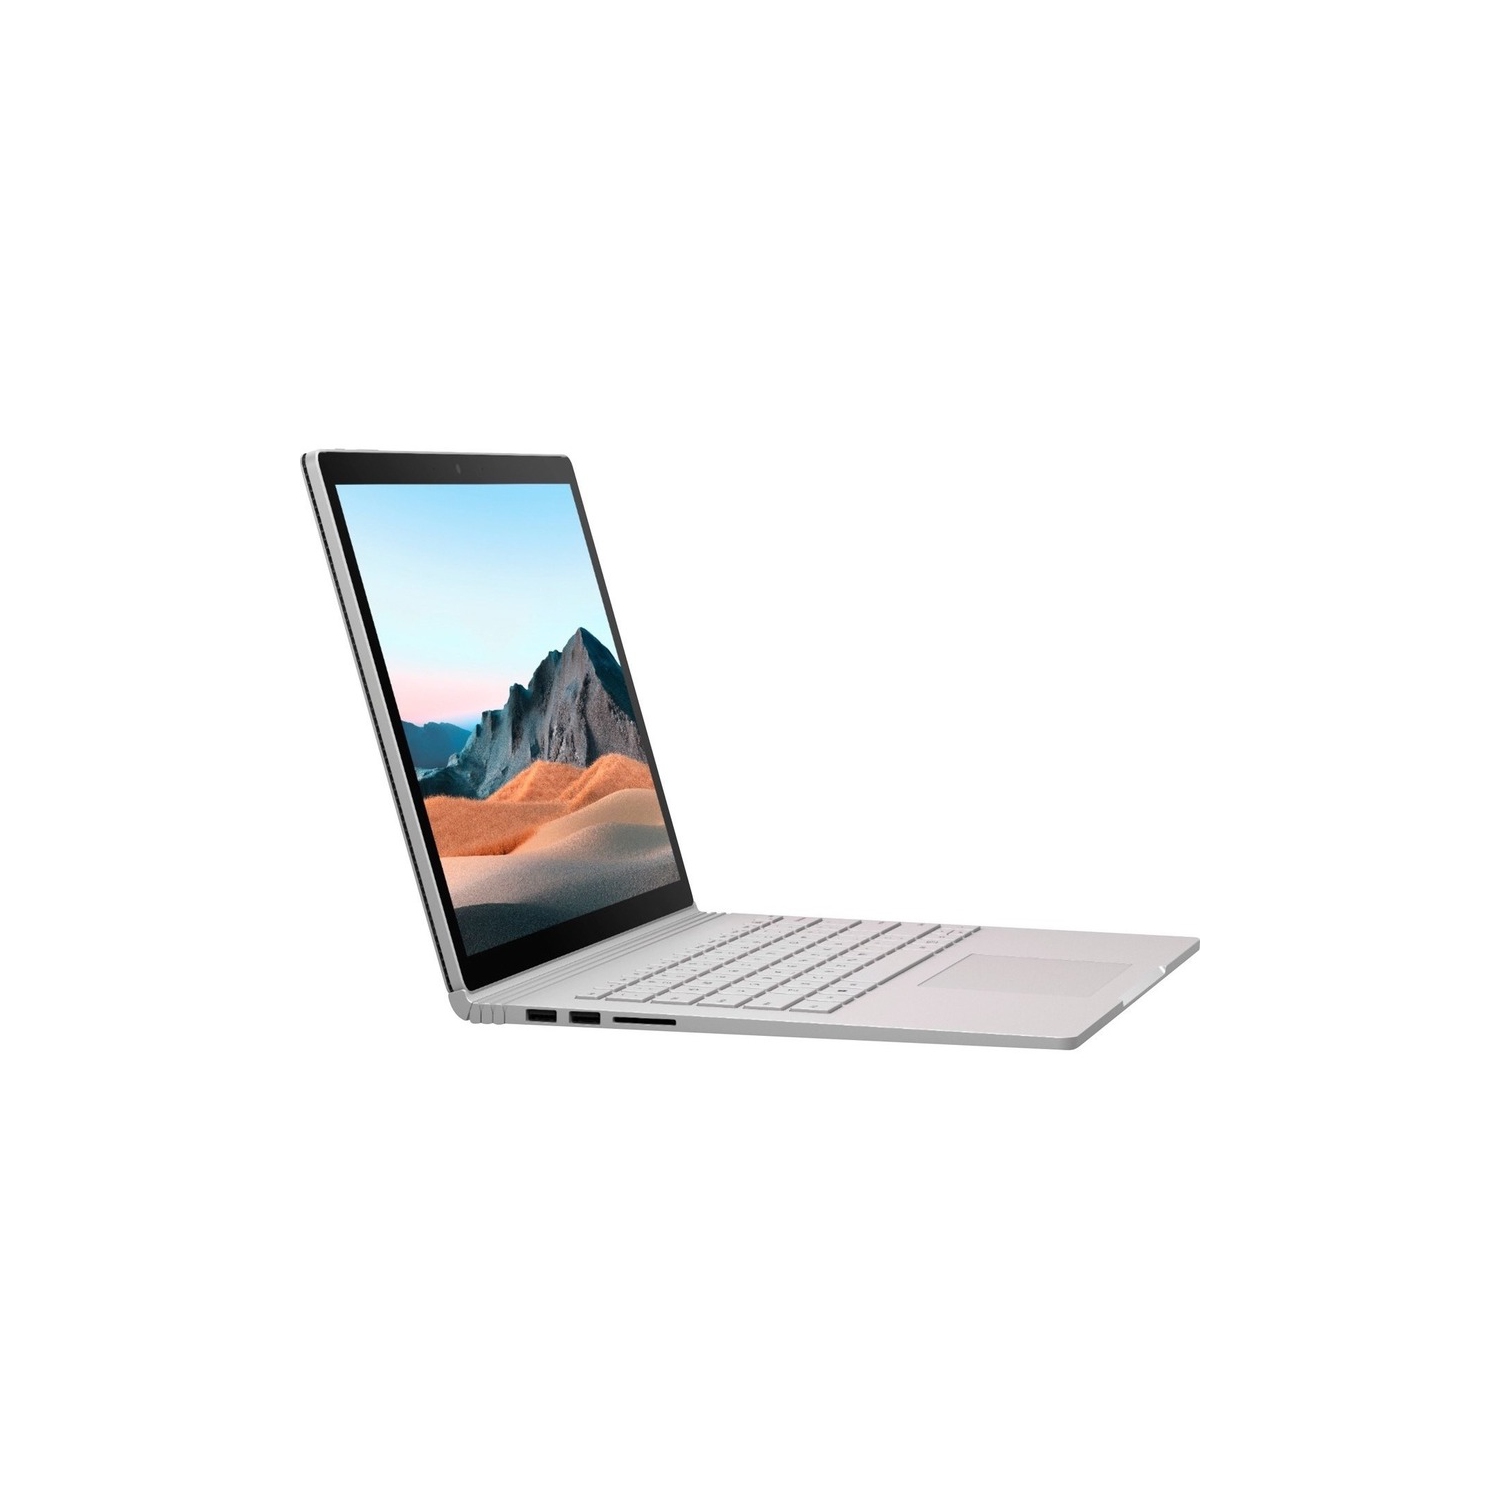 Microsoft Surface Book 3 Notebook i7-1065G7 256 GB Windows 10 Home SKY-00002